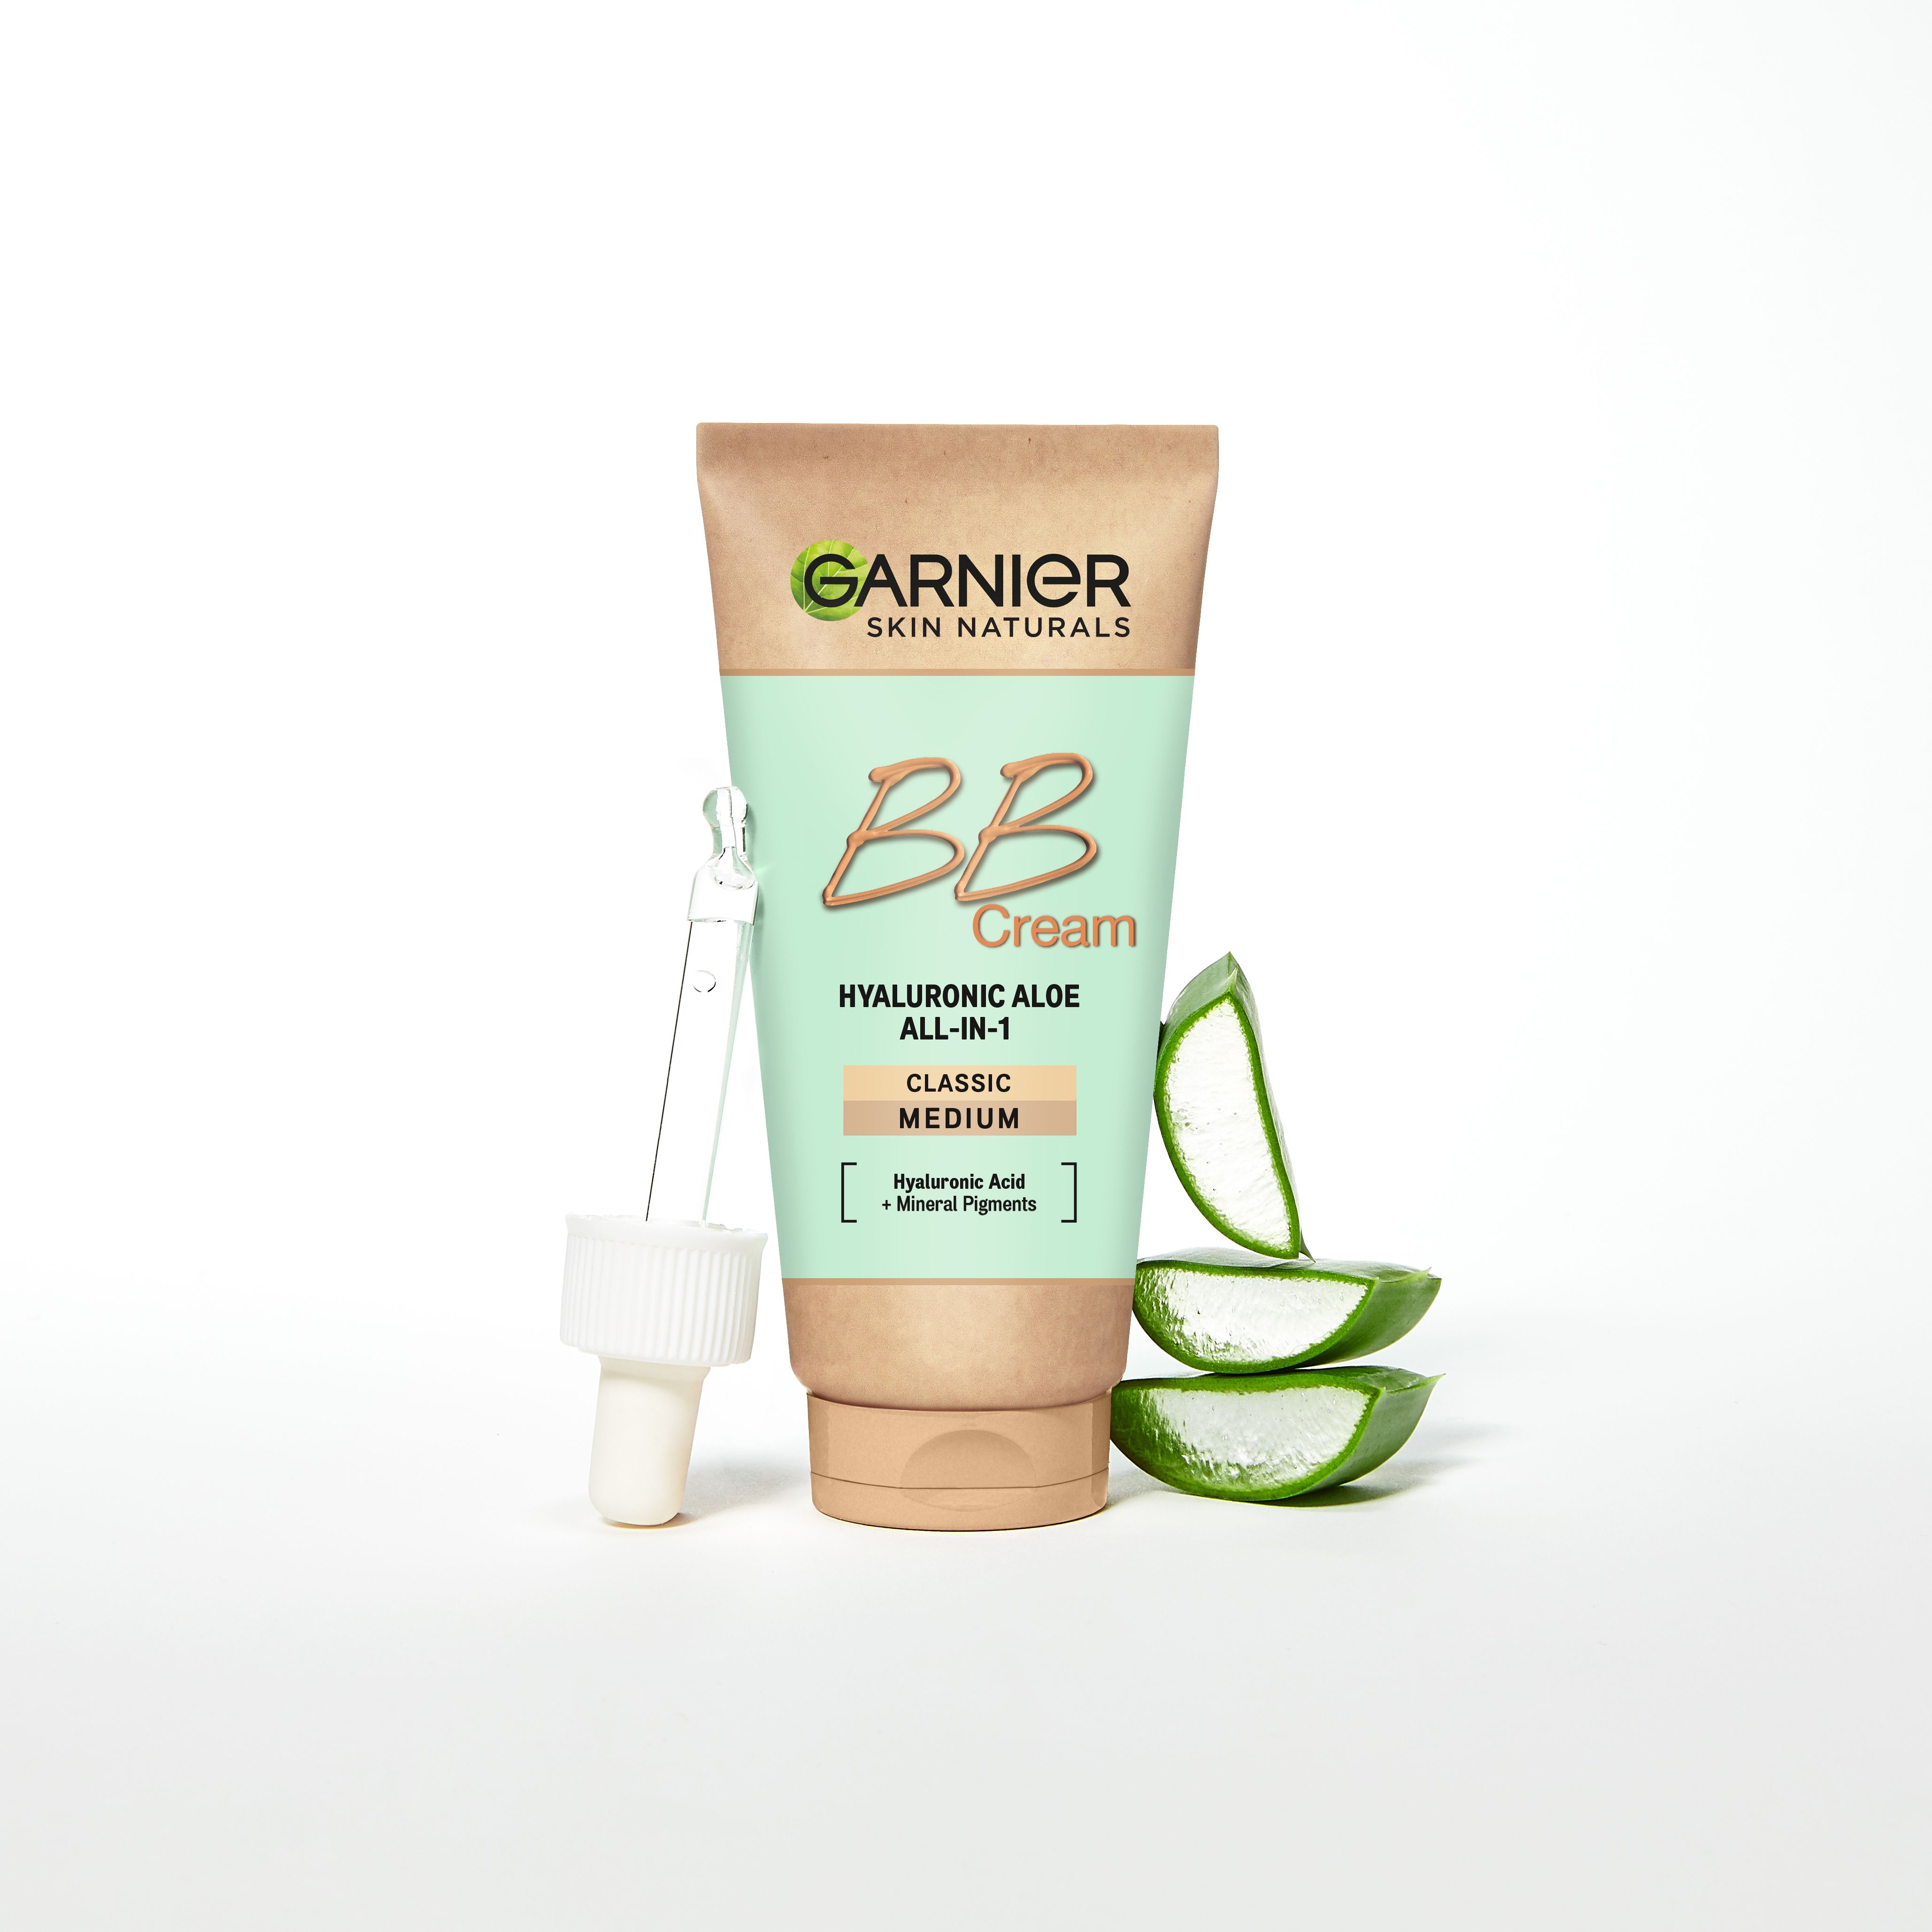 BB-крем Garnier Skin Naturals Секрет Досконалості SPF 15, Натурально-бежевий, 50 мл (C4019101) - фото 3